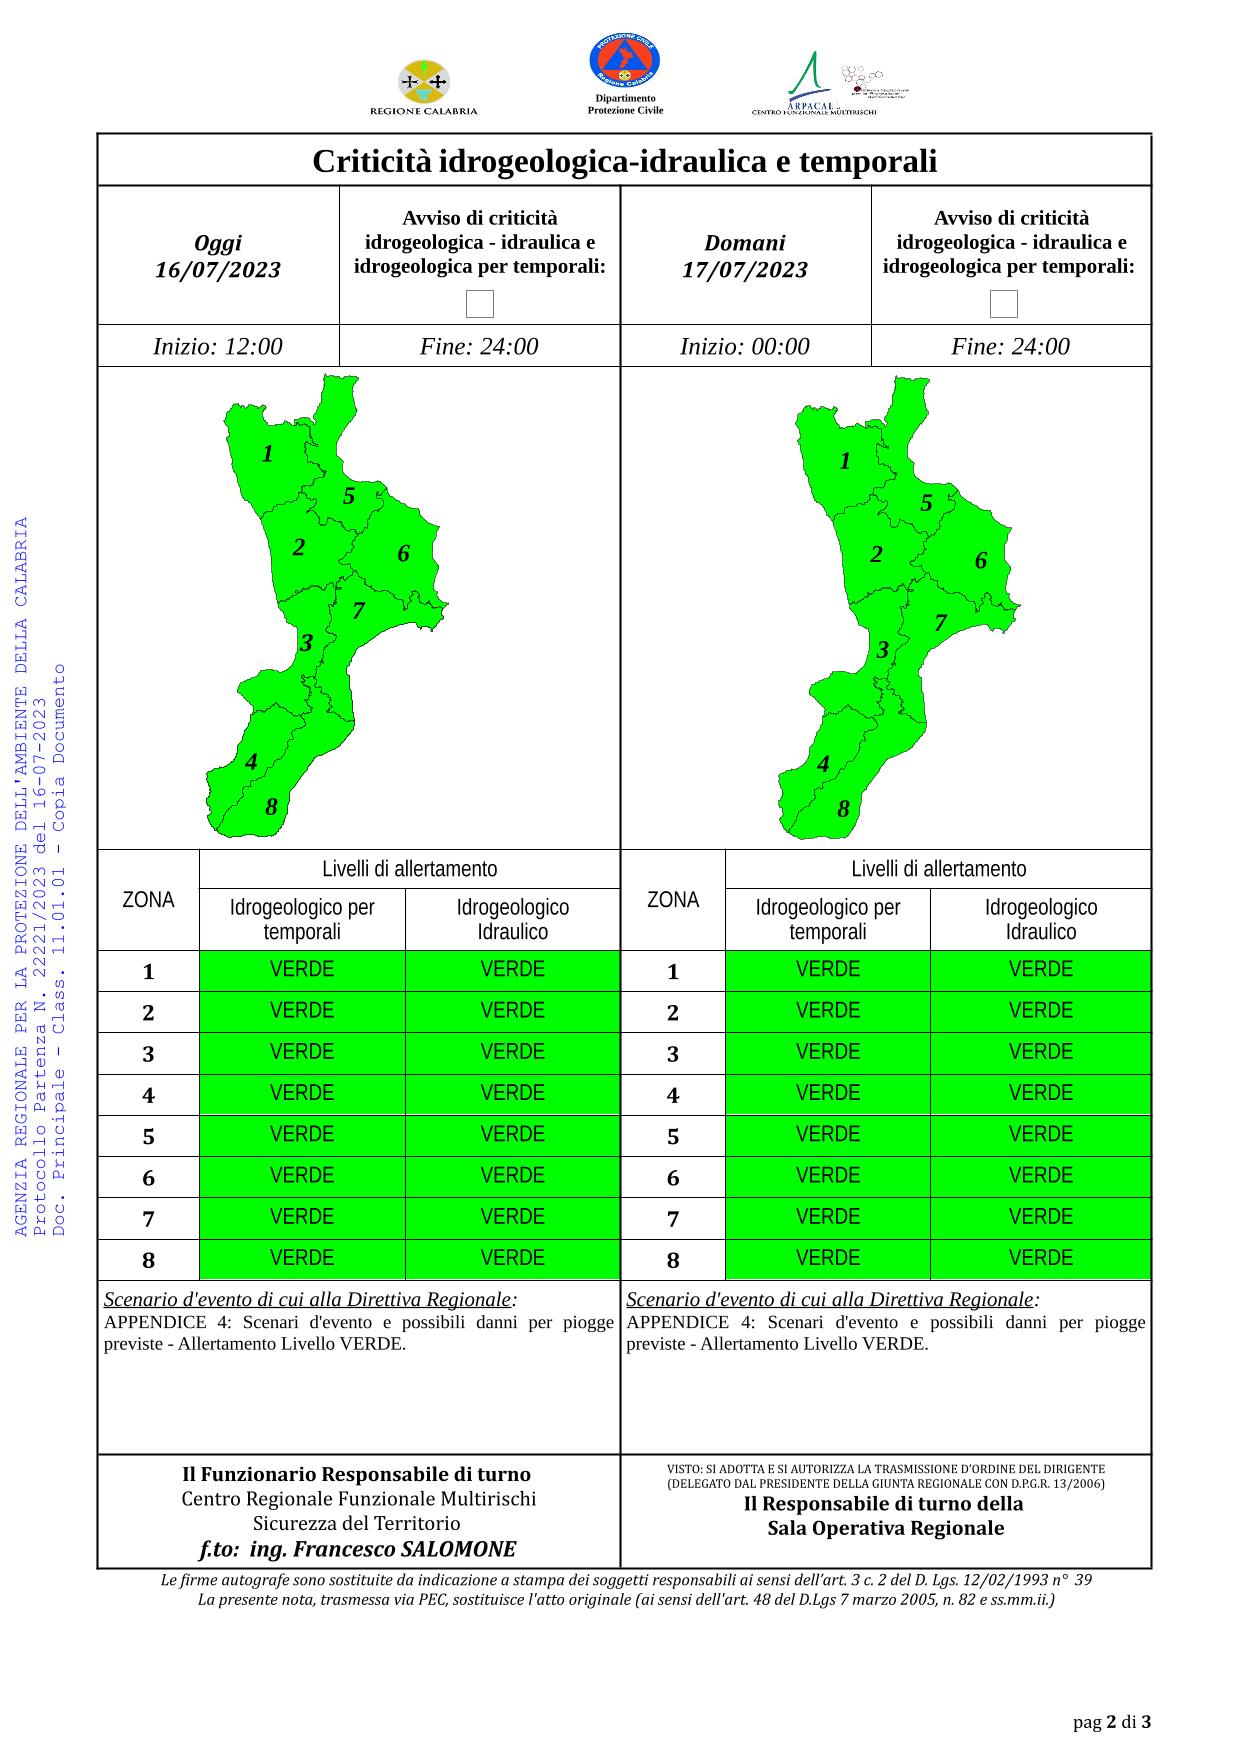 Criticità idrogeologica-idraulica e temporali in Calabria 16-07-2023